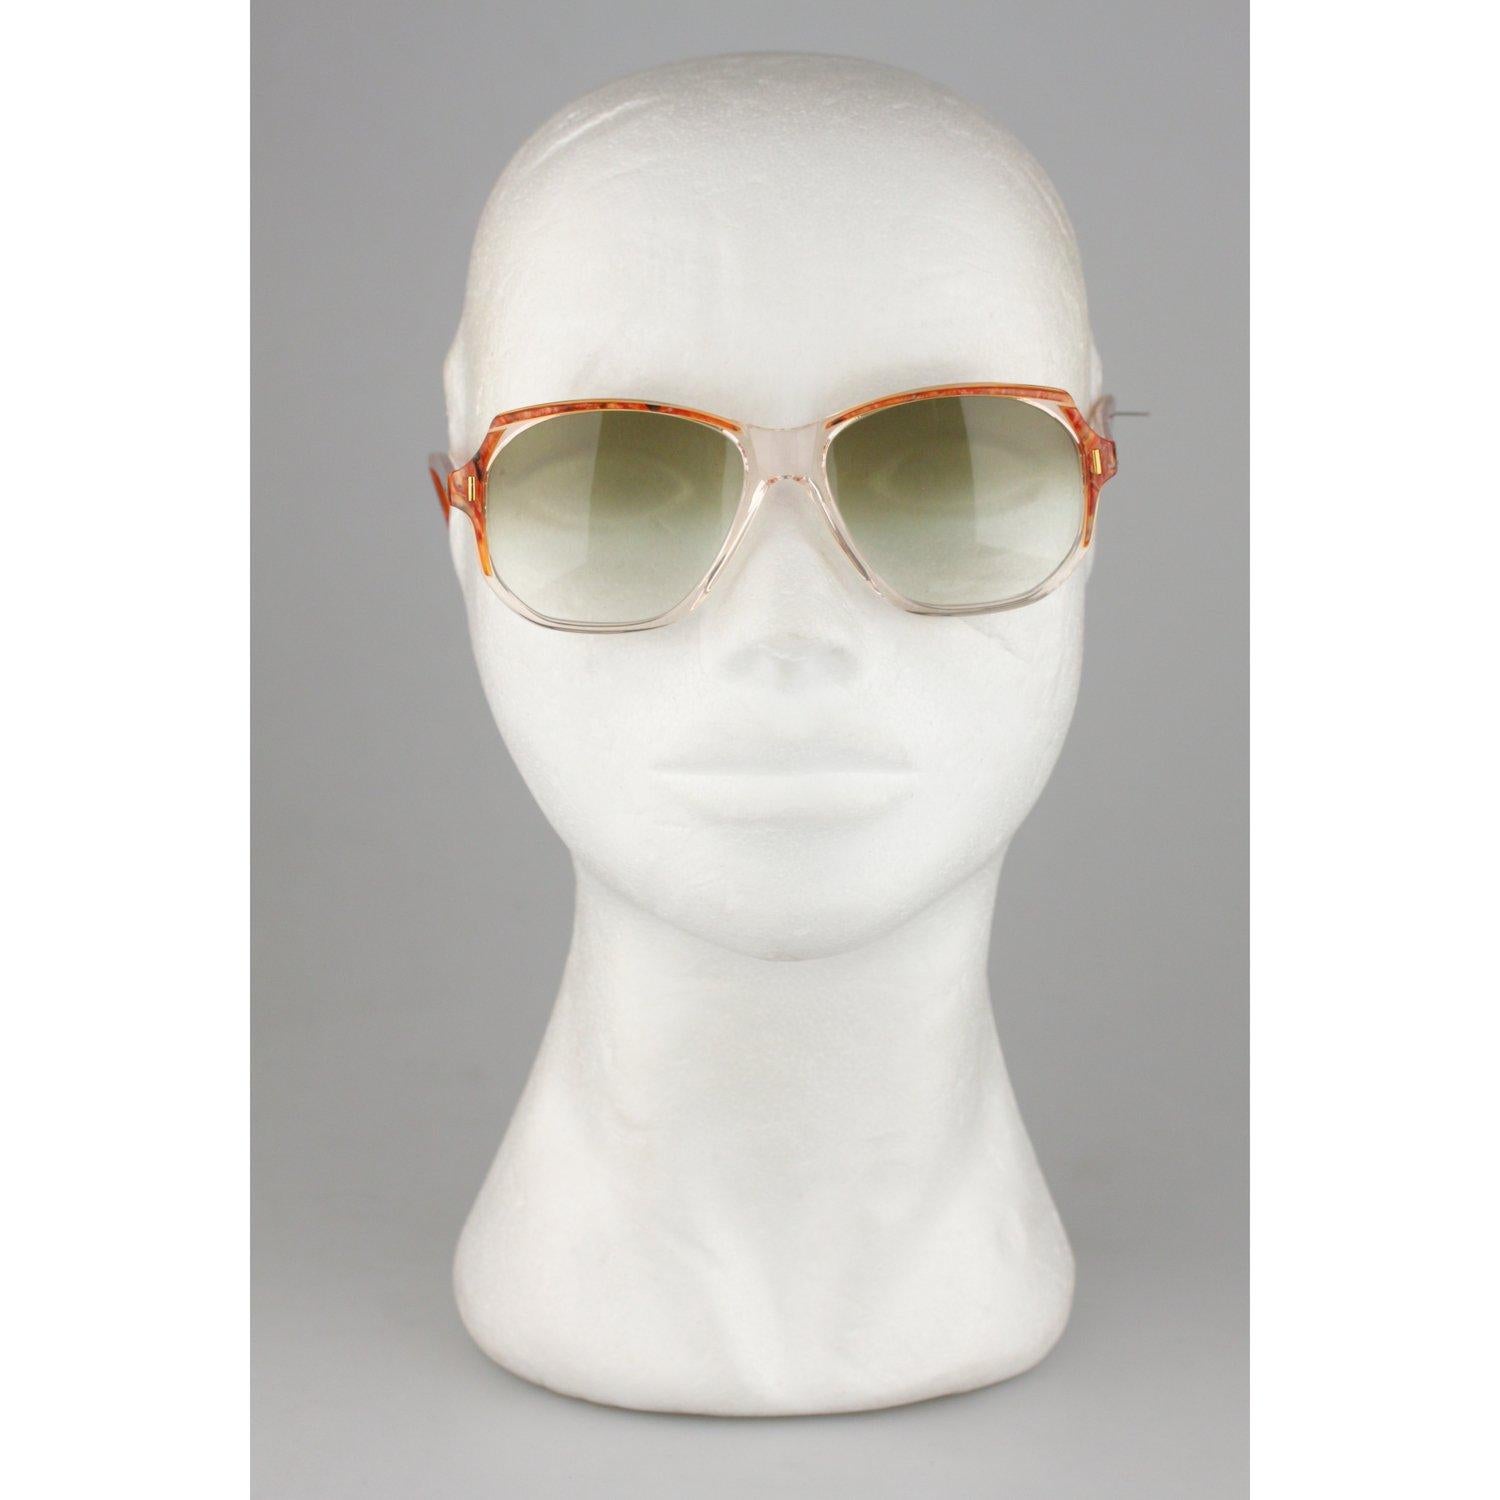 Brown Yves Saint Laurent Vintage Sunglasses mod Salamine 54mm New Old Stock